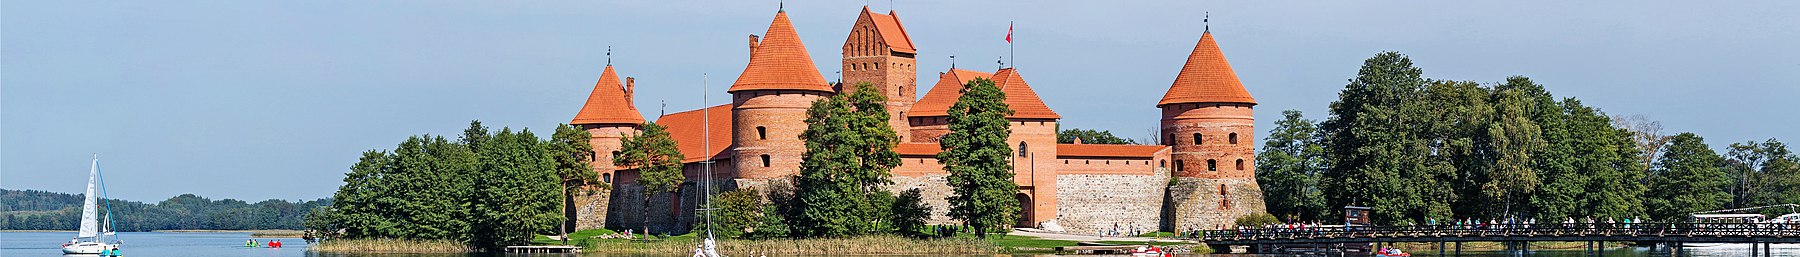 Trakai द्वीप कैसल, लिथुआनिया - Diliff बैनर.jpg